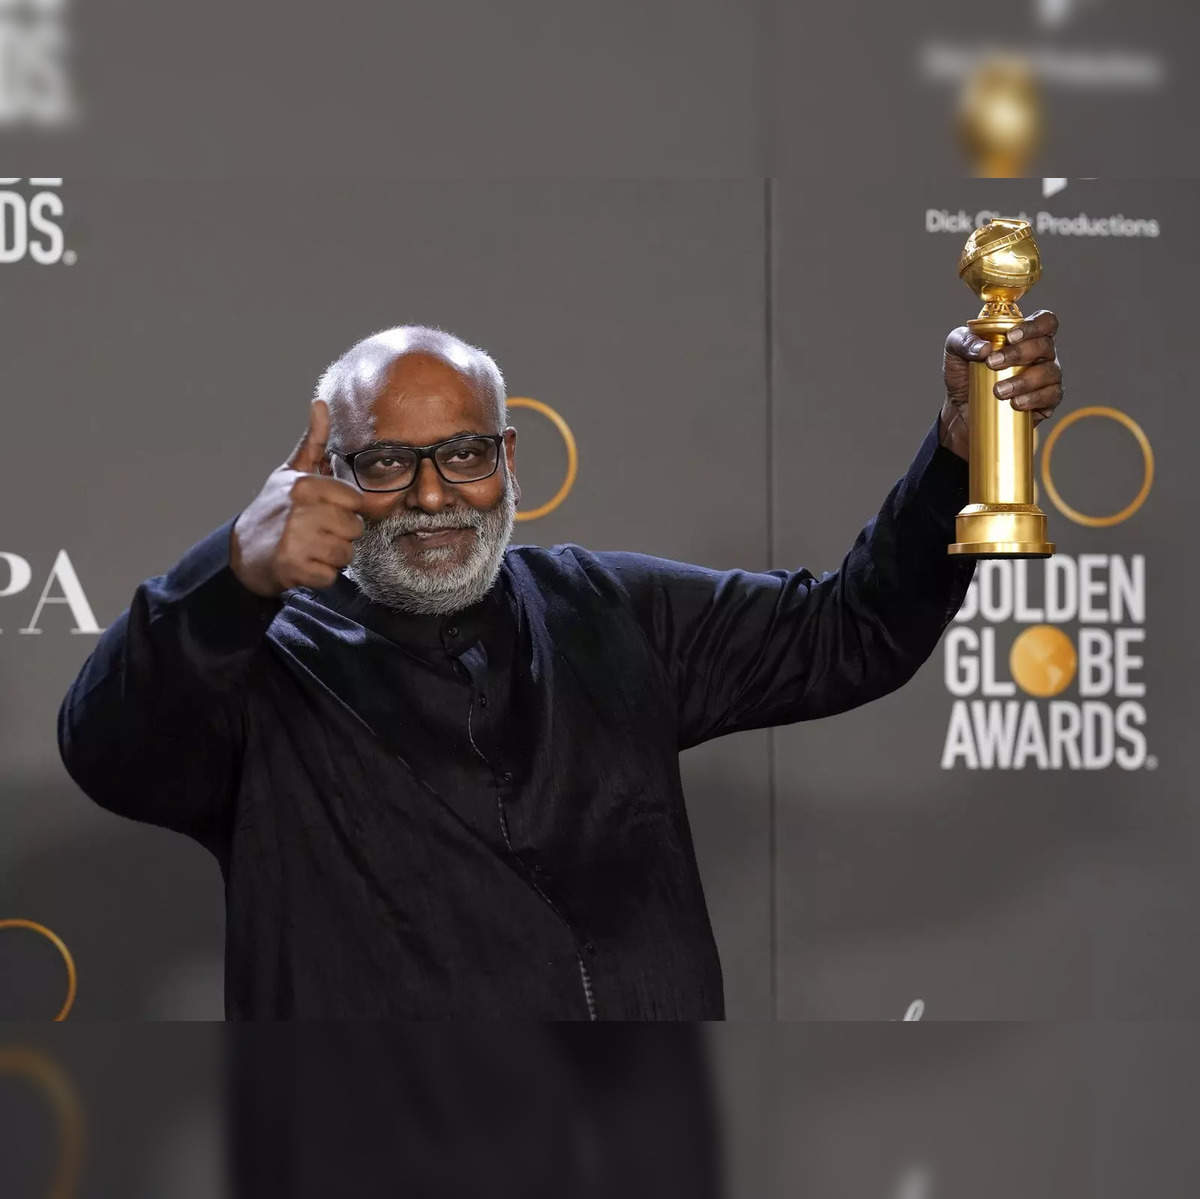 mm keeravani: All you need to know about MM Keeravani, the man behind the  Golden Globe winning 'Naatu Naatu' from RRR - The Economic Times